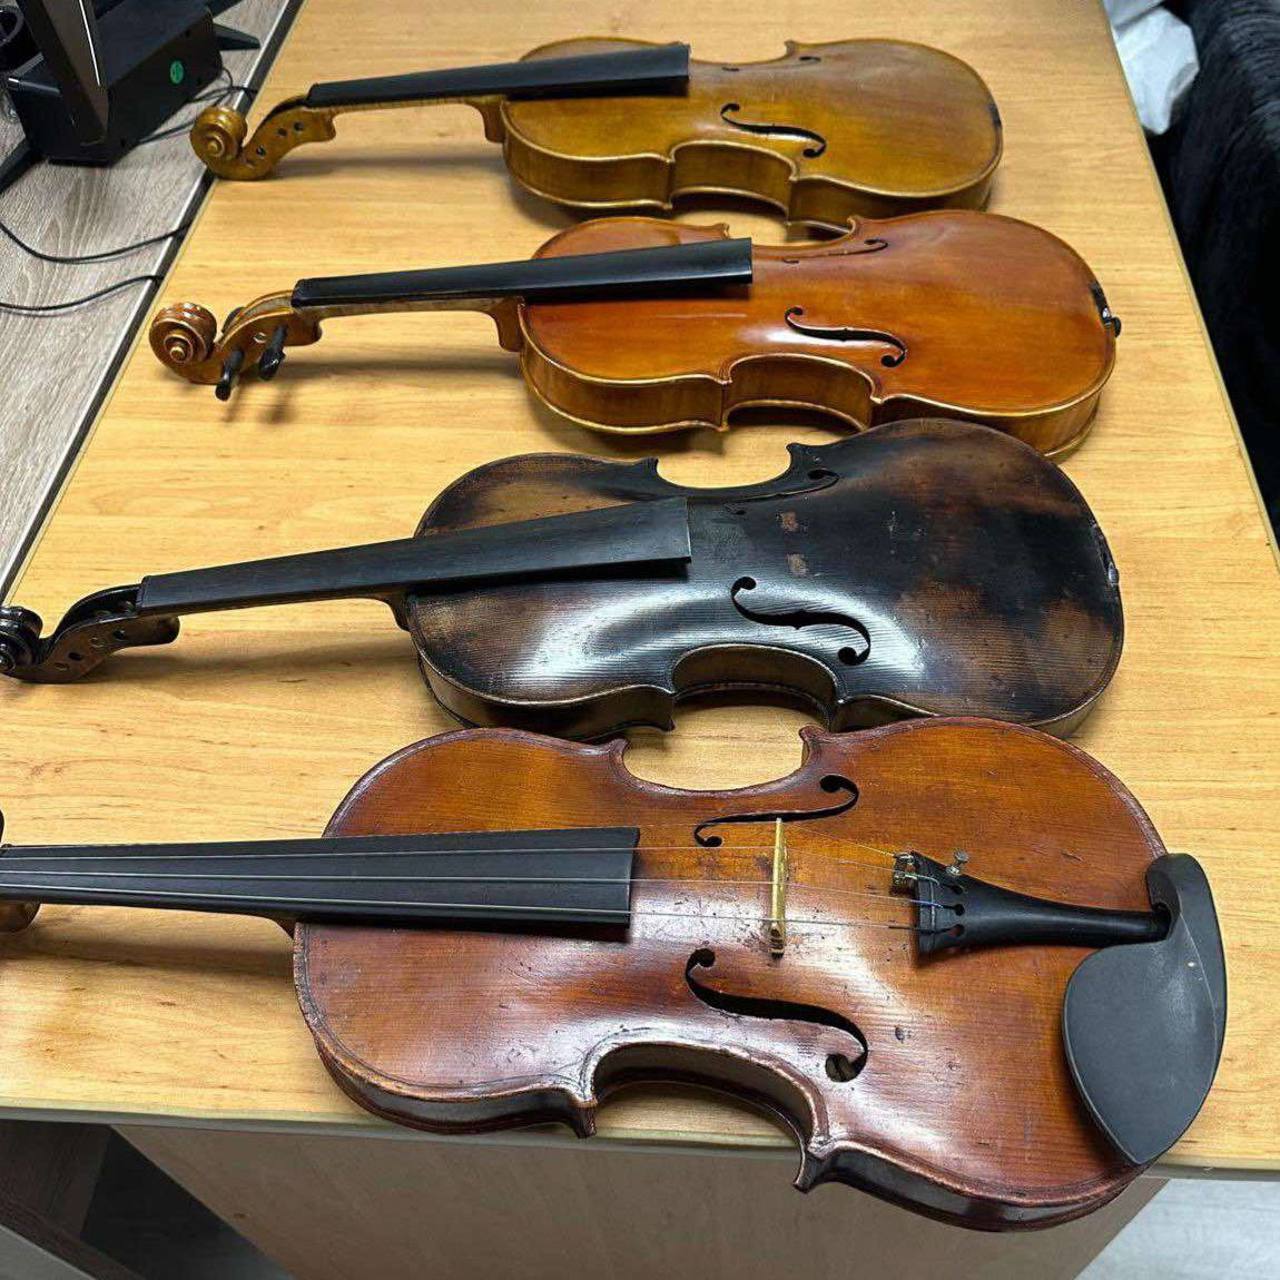 Four undeclared violins were detected at Leușeni Customs